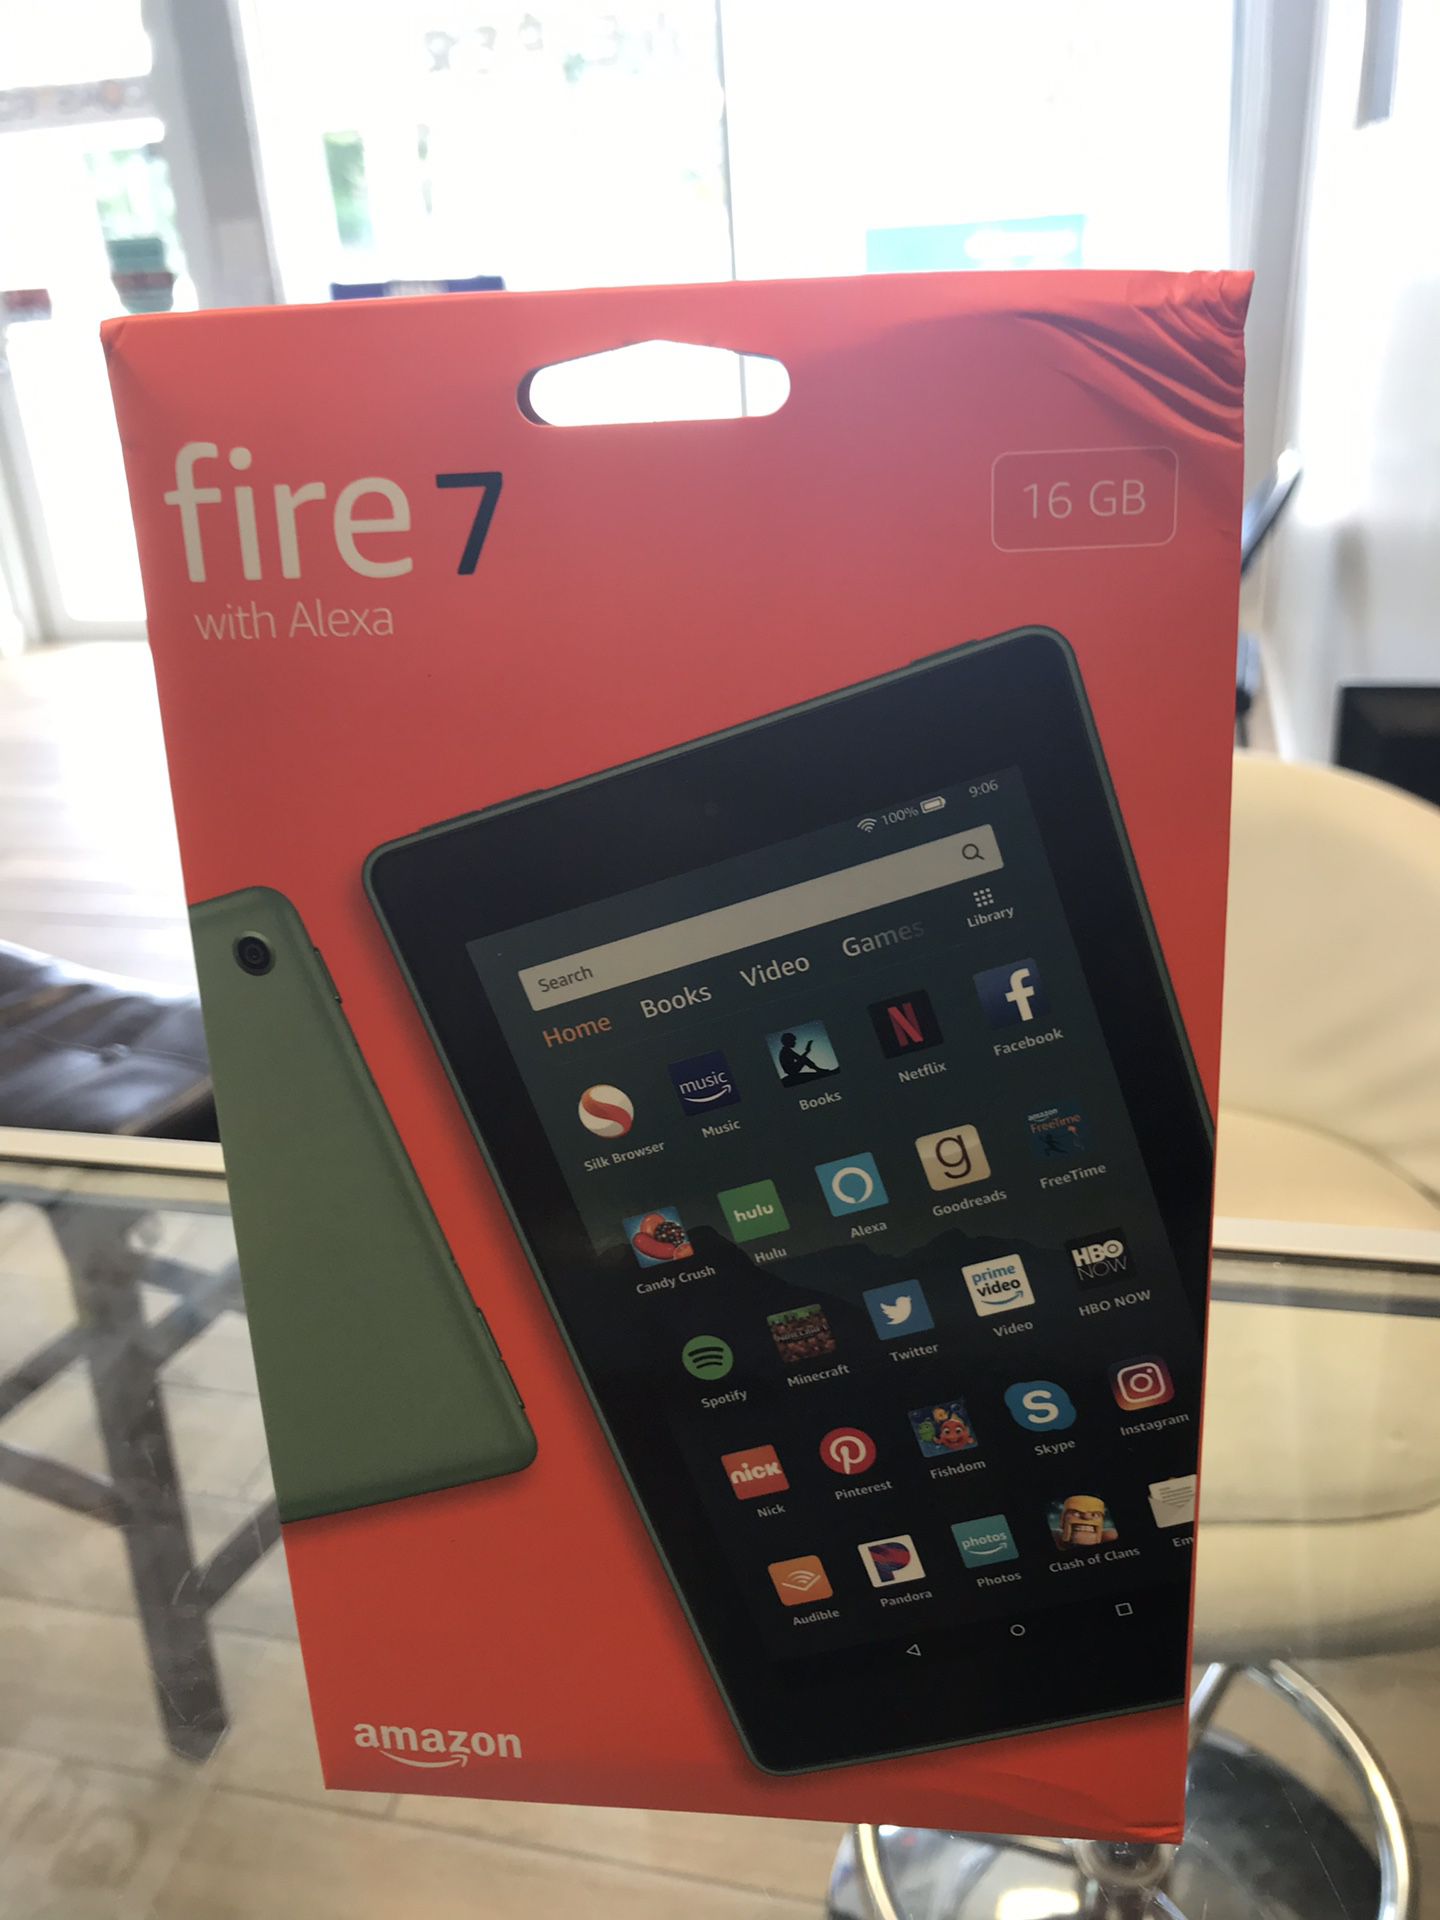 Fire 7 with Alexa amazon 16GB